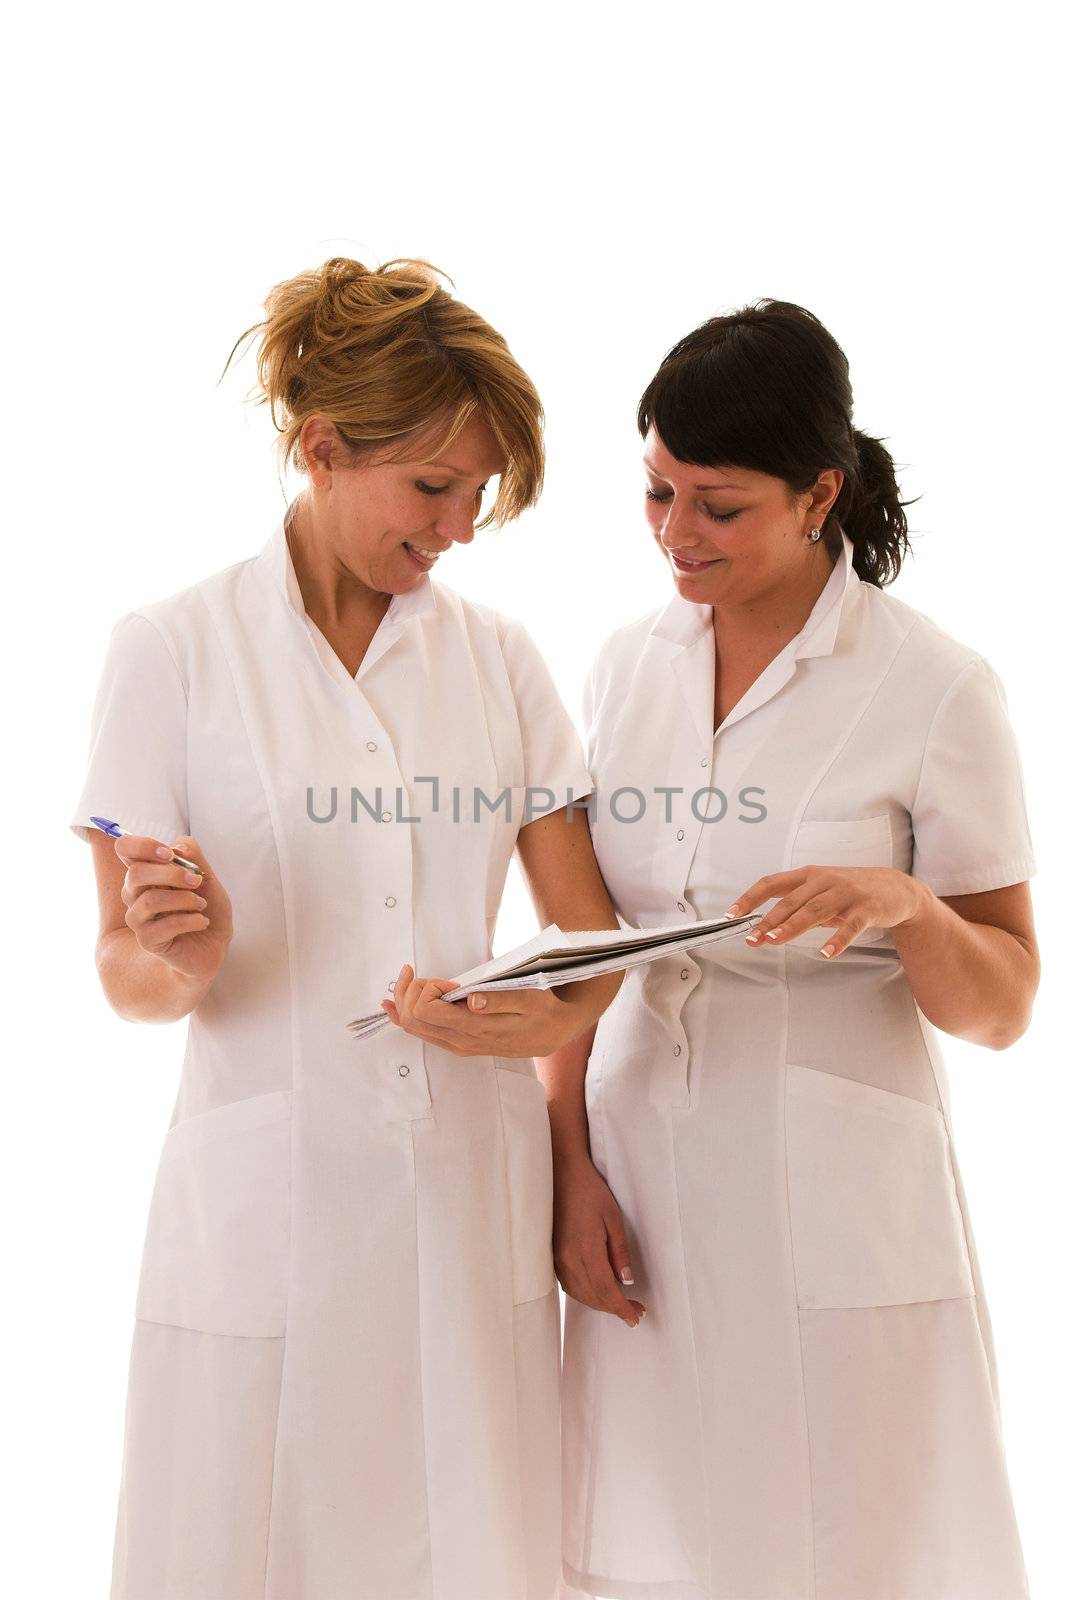 Two nurses working by Fotosmurf